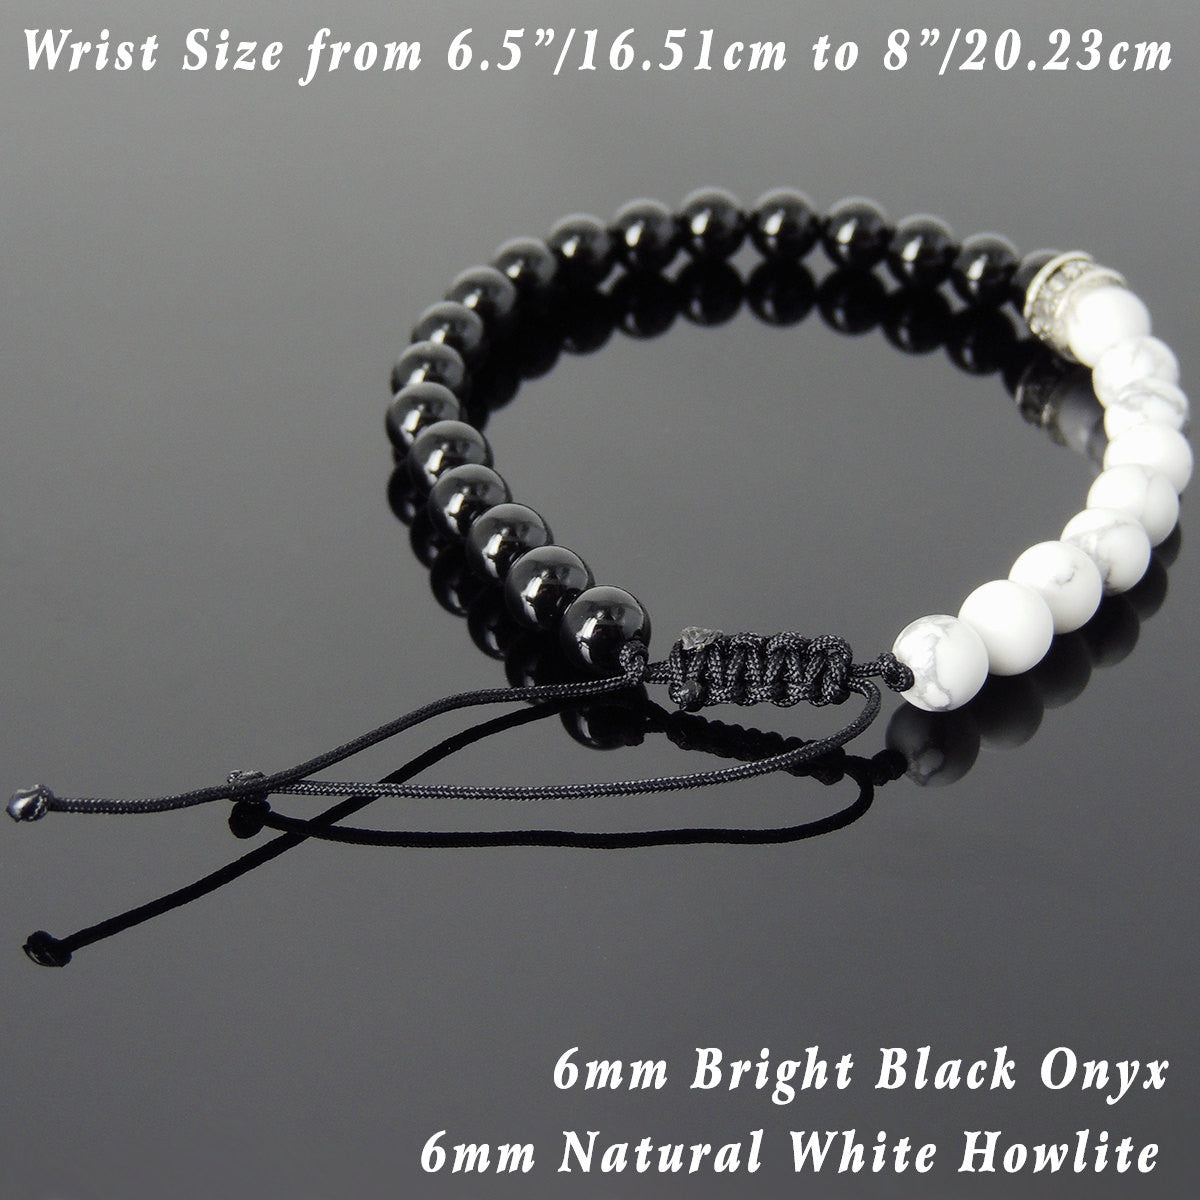 6mm Bright Black Onyx & White Howlite Adjustable Braided Gemstone Bracelet with Genuine S925 Sterling Silver Cross Spacer Bead- Handmade by Gem & Silver BR903